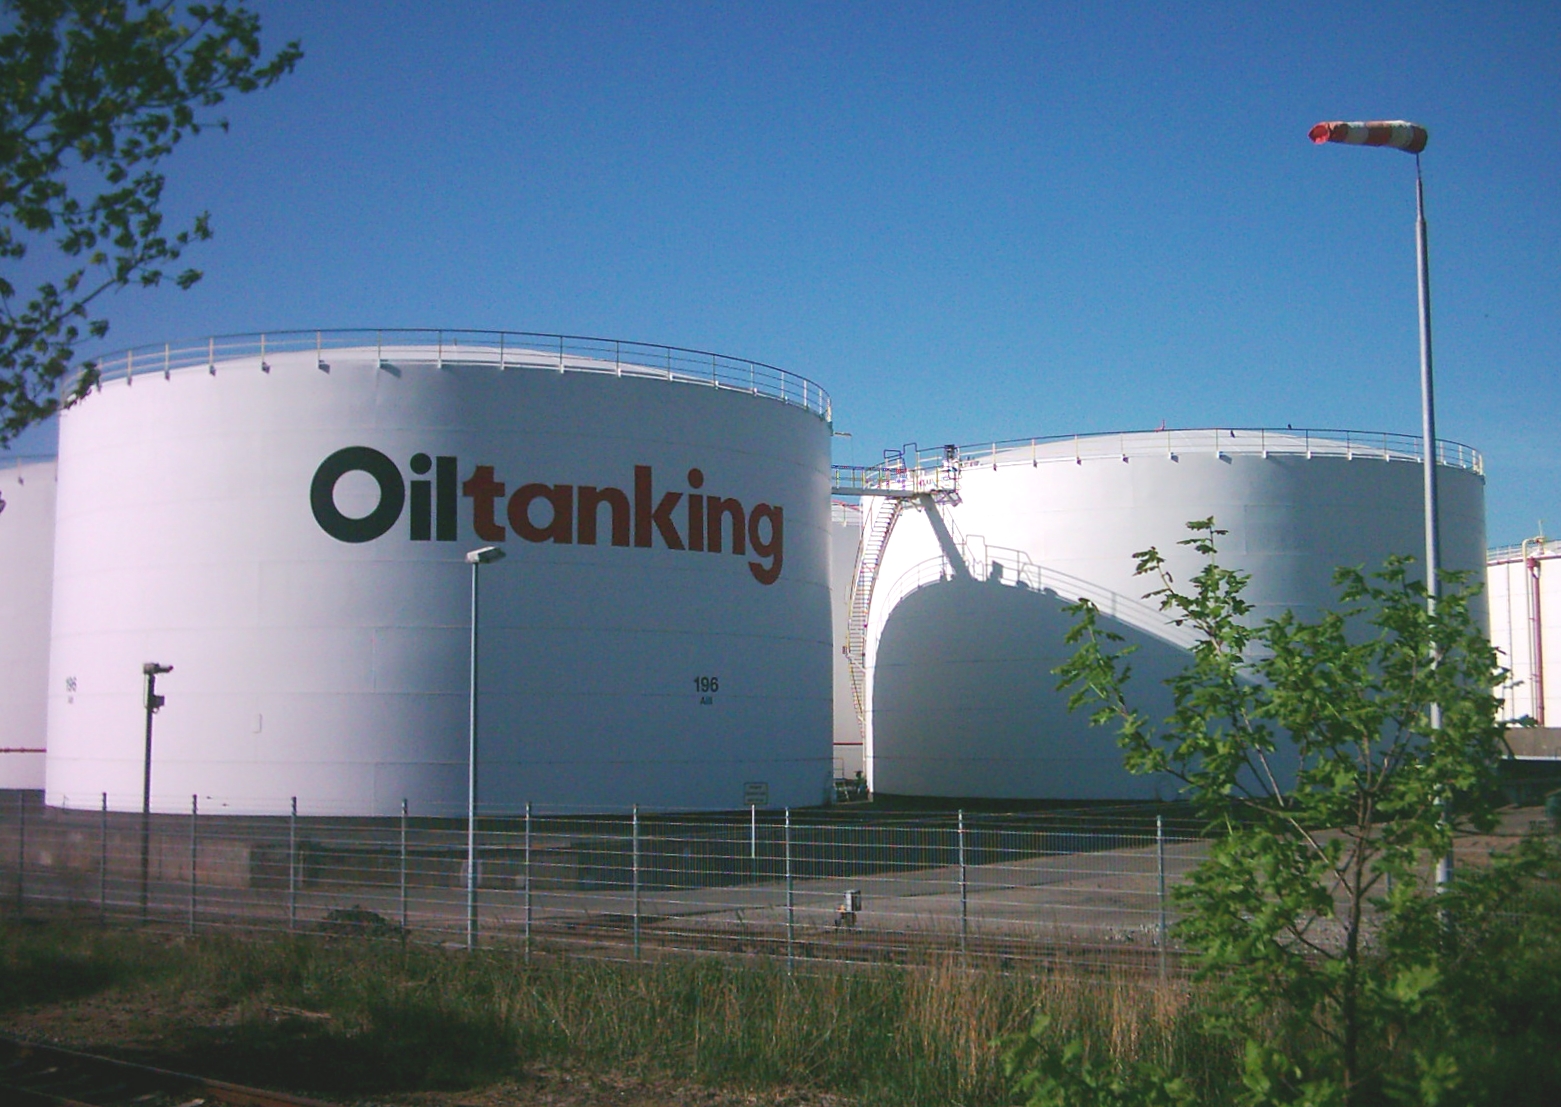 Oiltanking in Hamburg. (Foto Wikimedia)